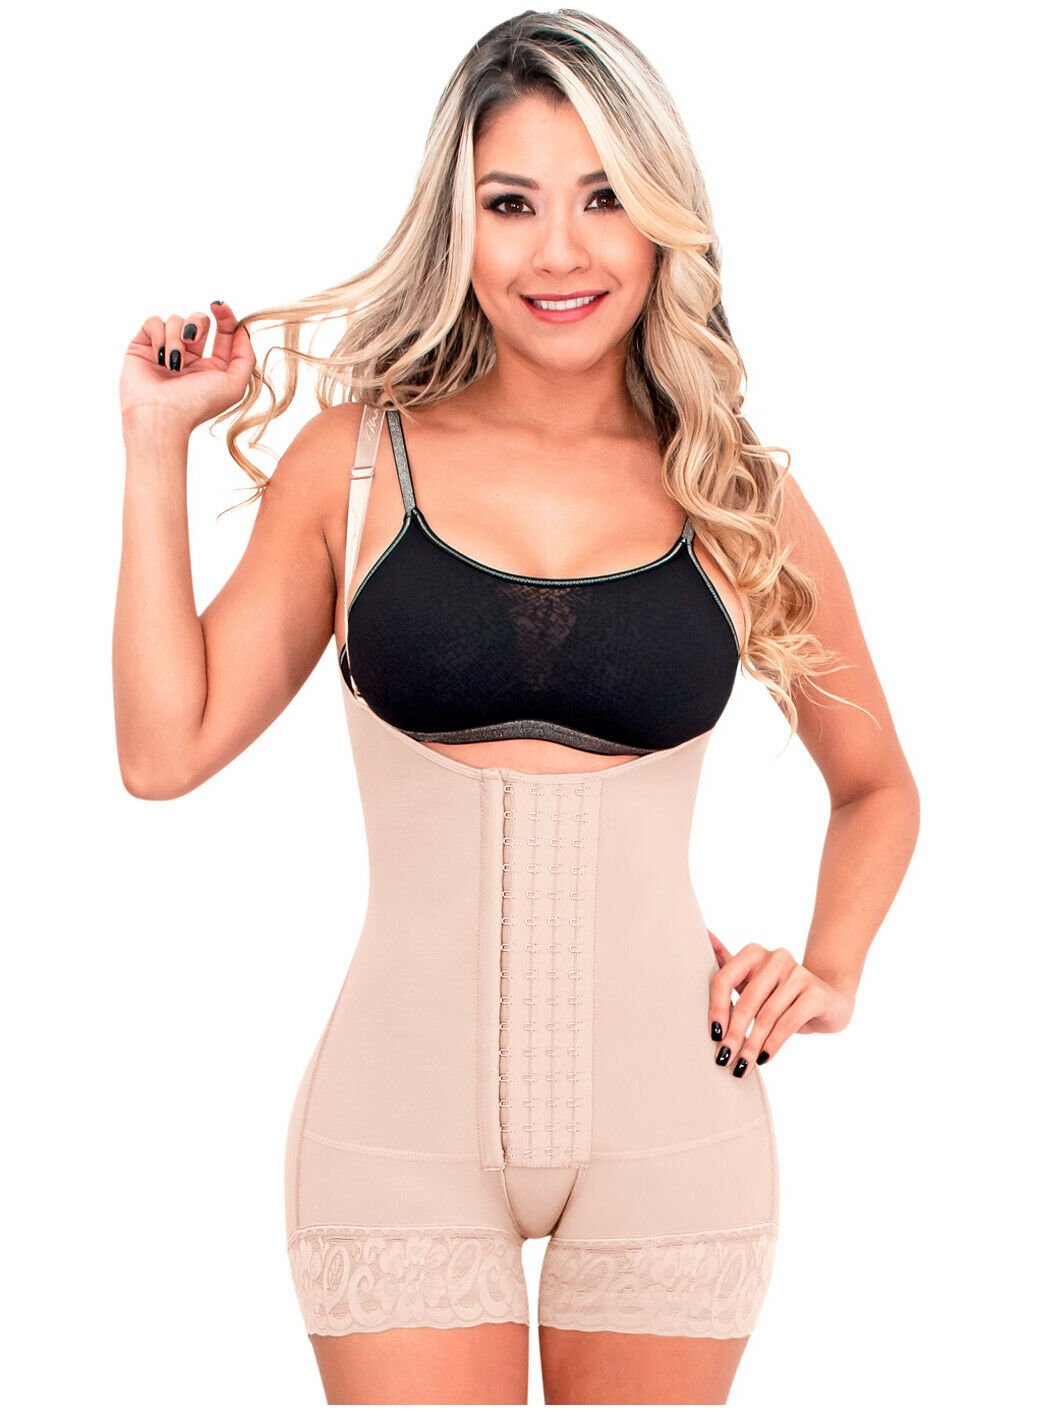 Sonryse 052 Full Body Shaper for Women Liposuction Compression Garments